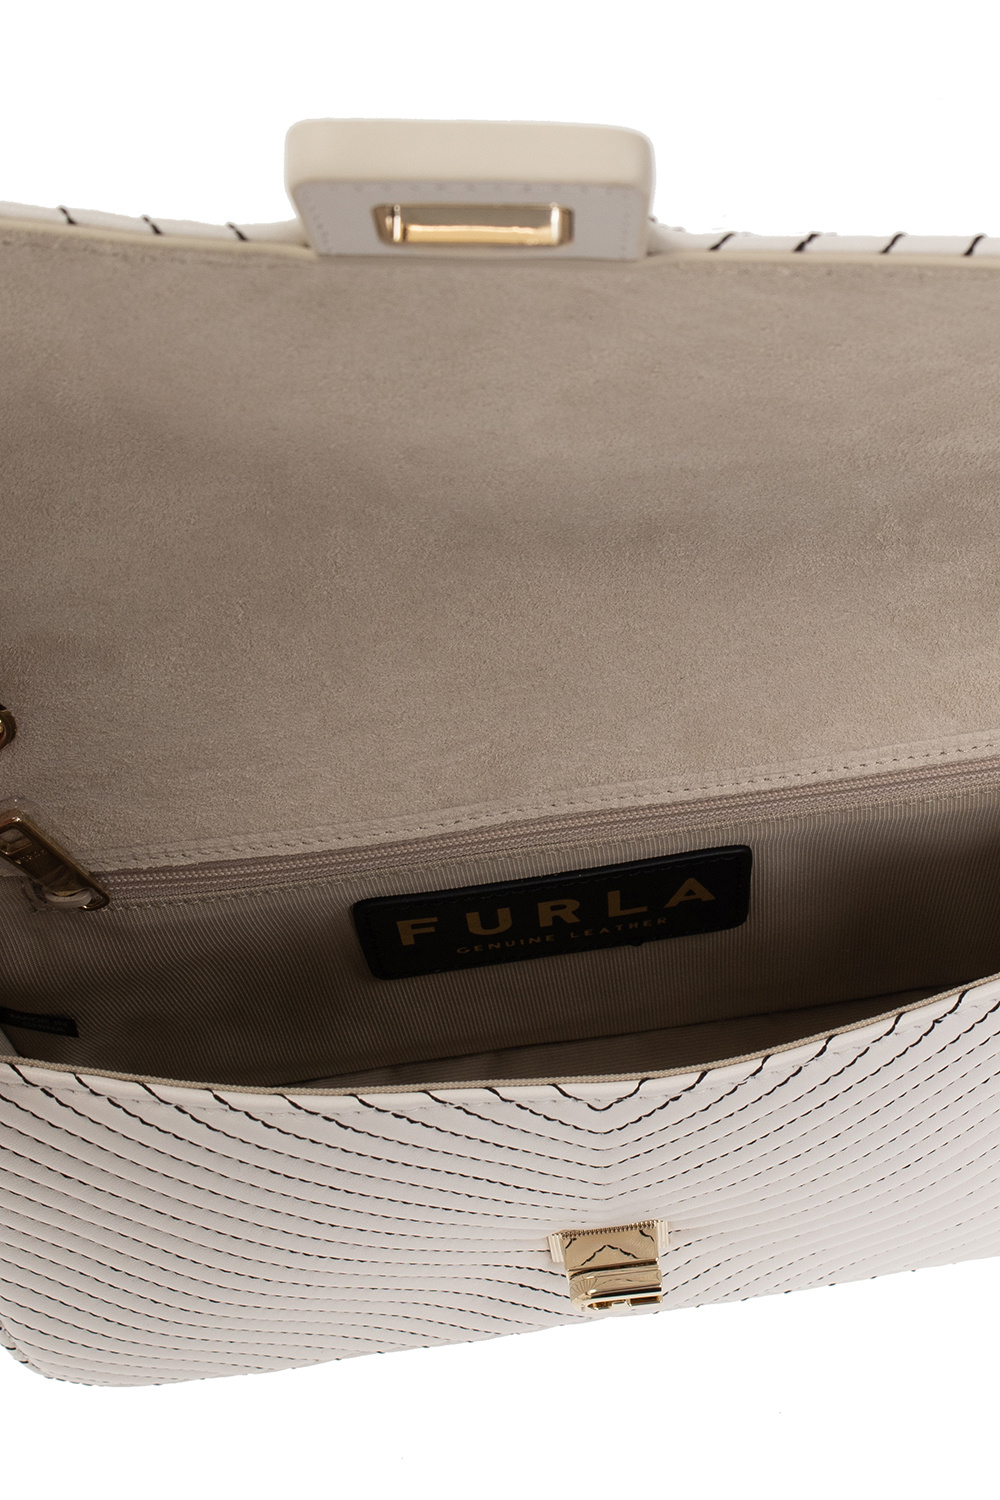 Furla 'Pop Star Small' shoulder bag | Women's Bags | Alexander 